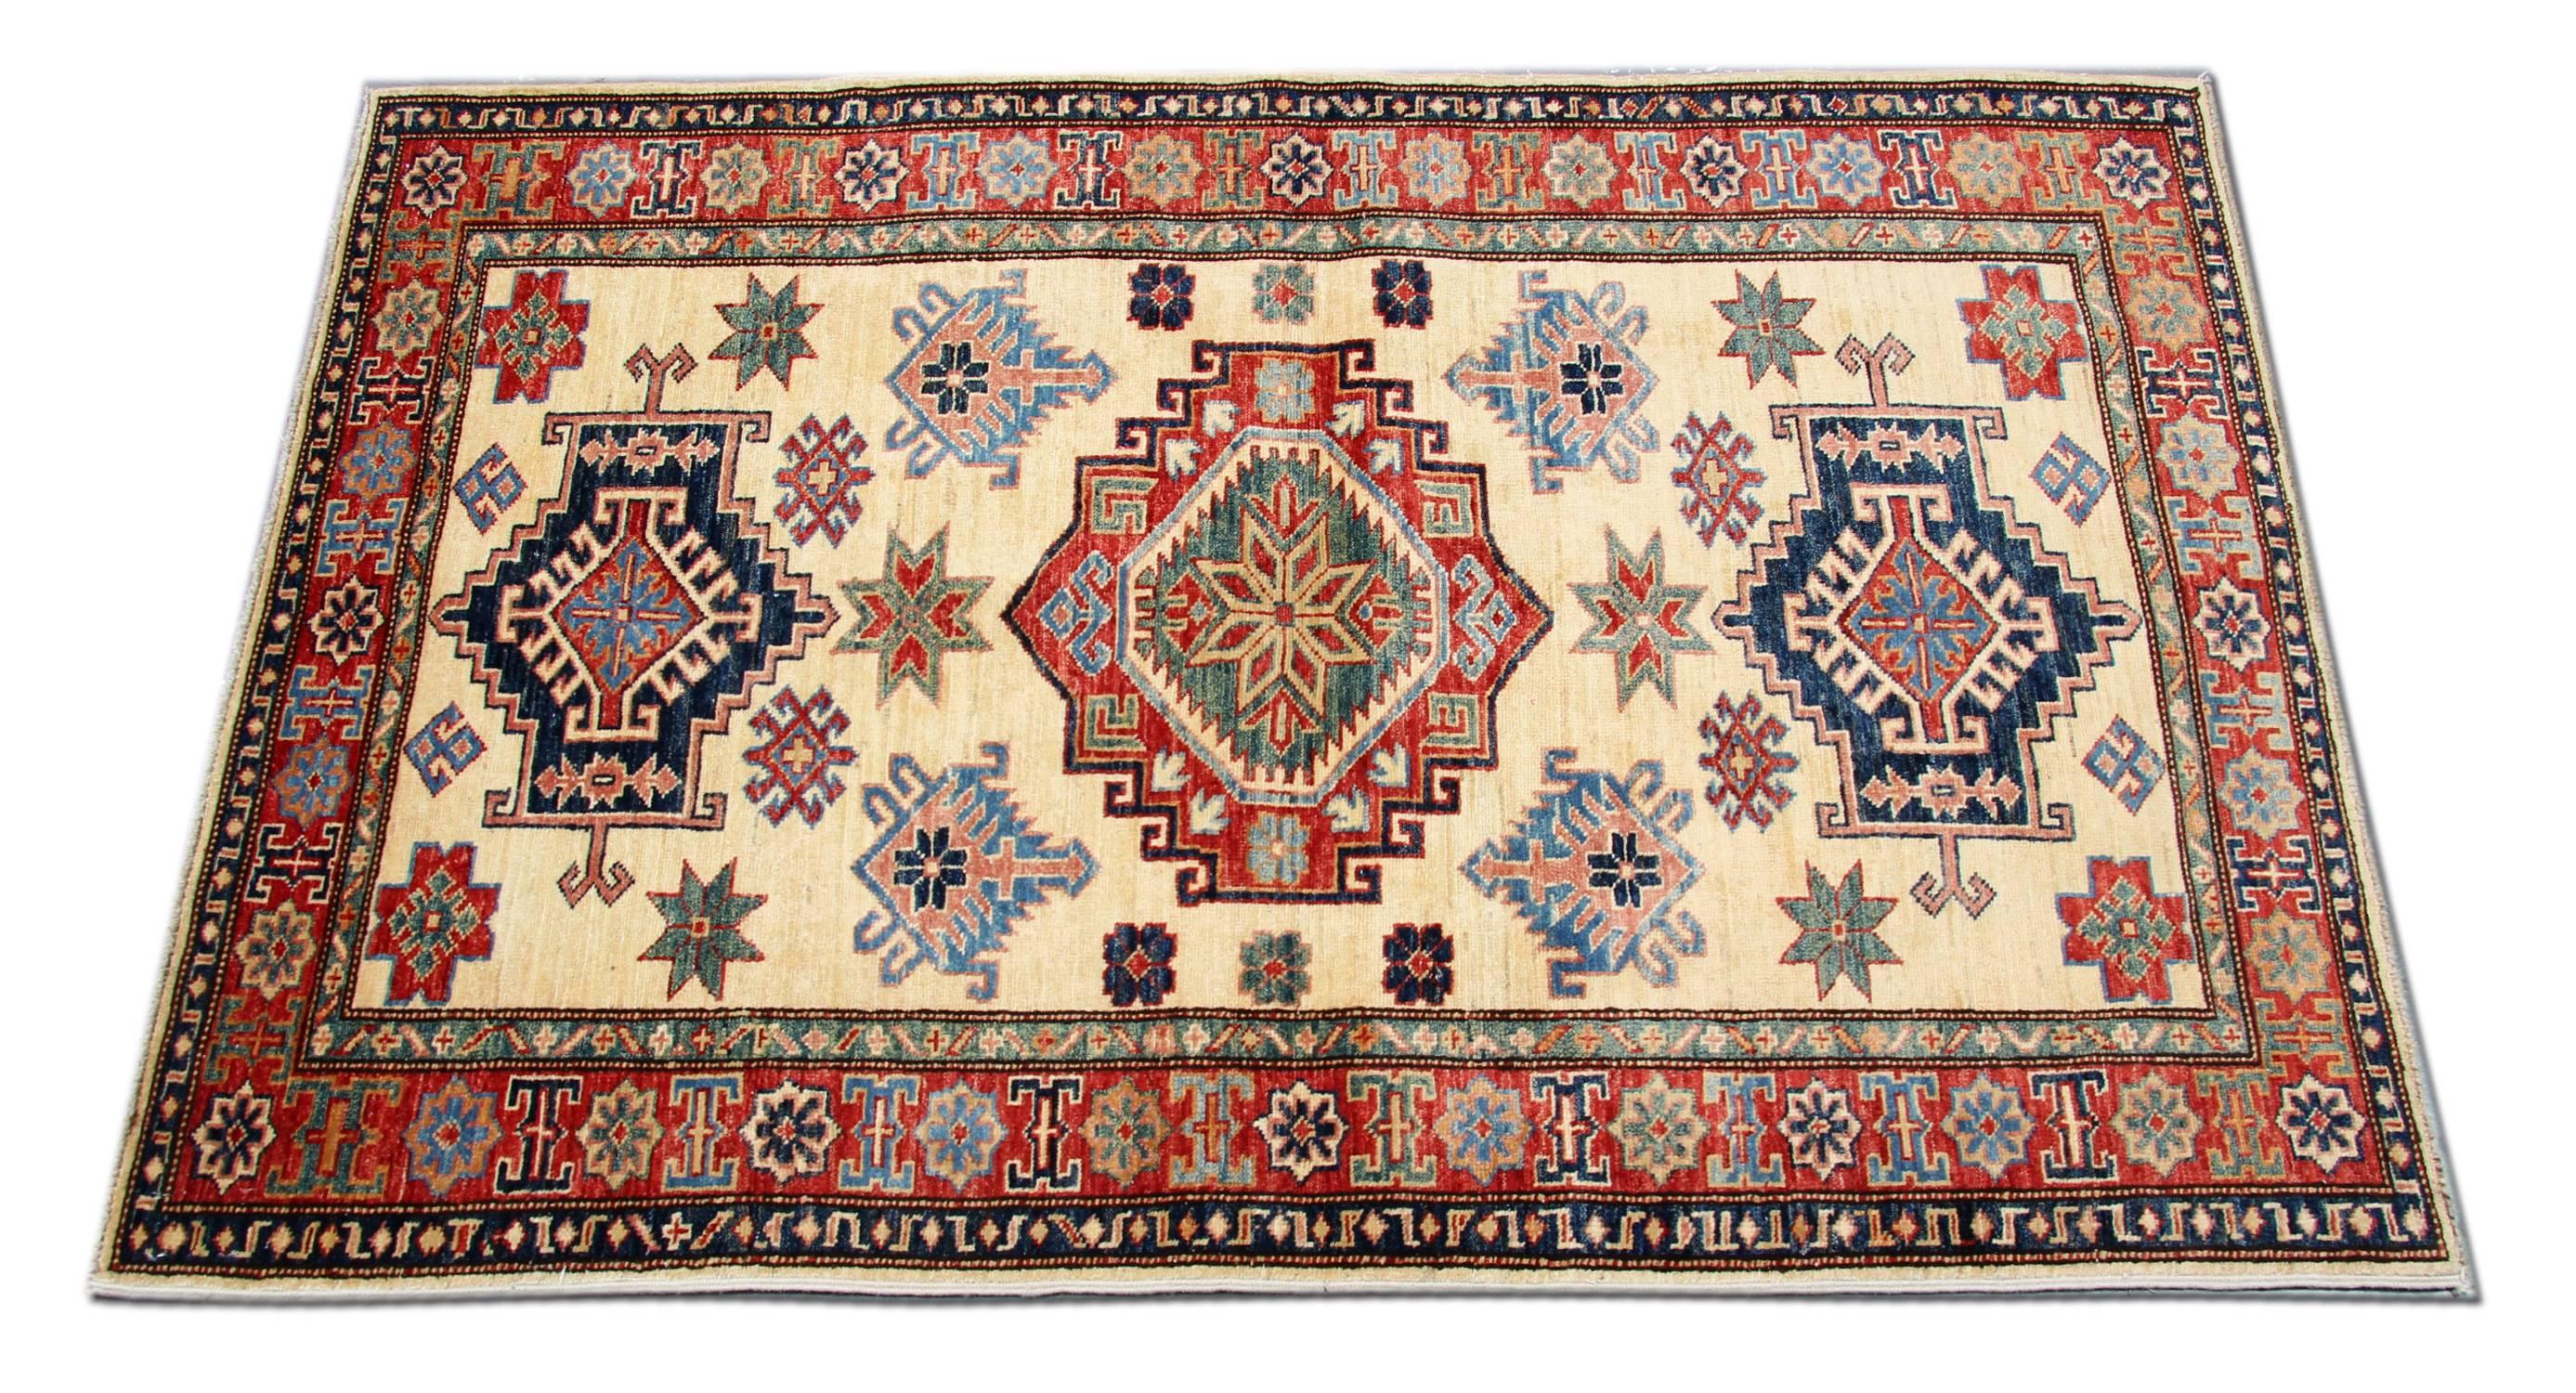 Afghan Handmade Kazak Rugs, Geometric Rugs, Carpet for Sale 98 x 143 cm For Sale